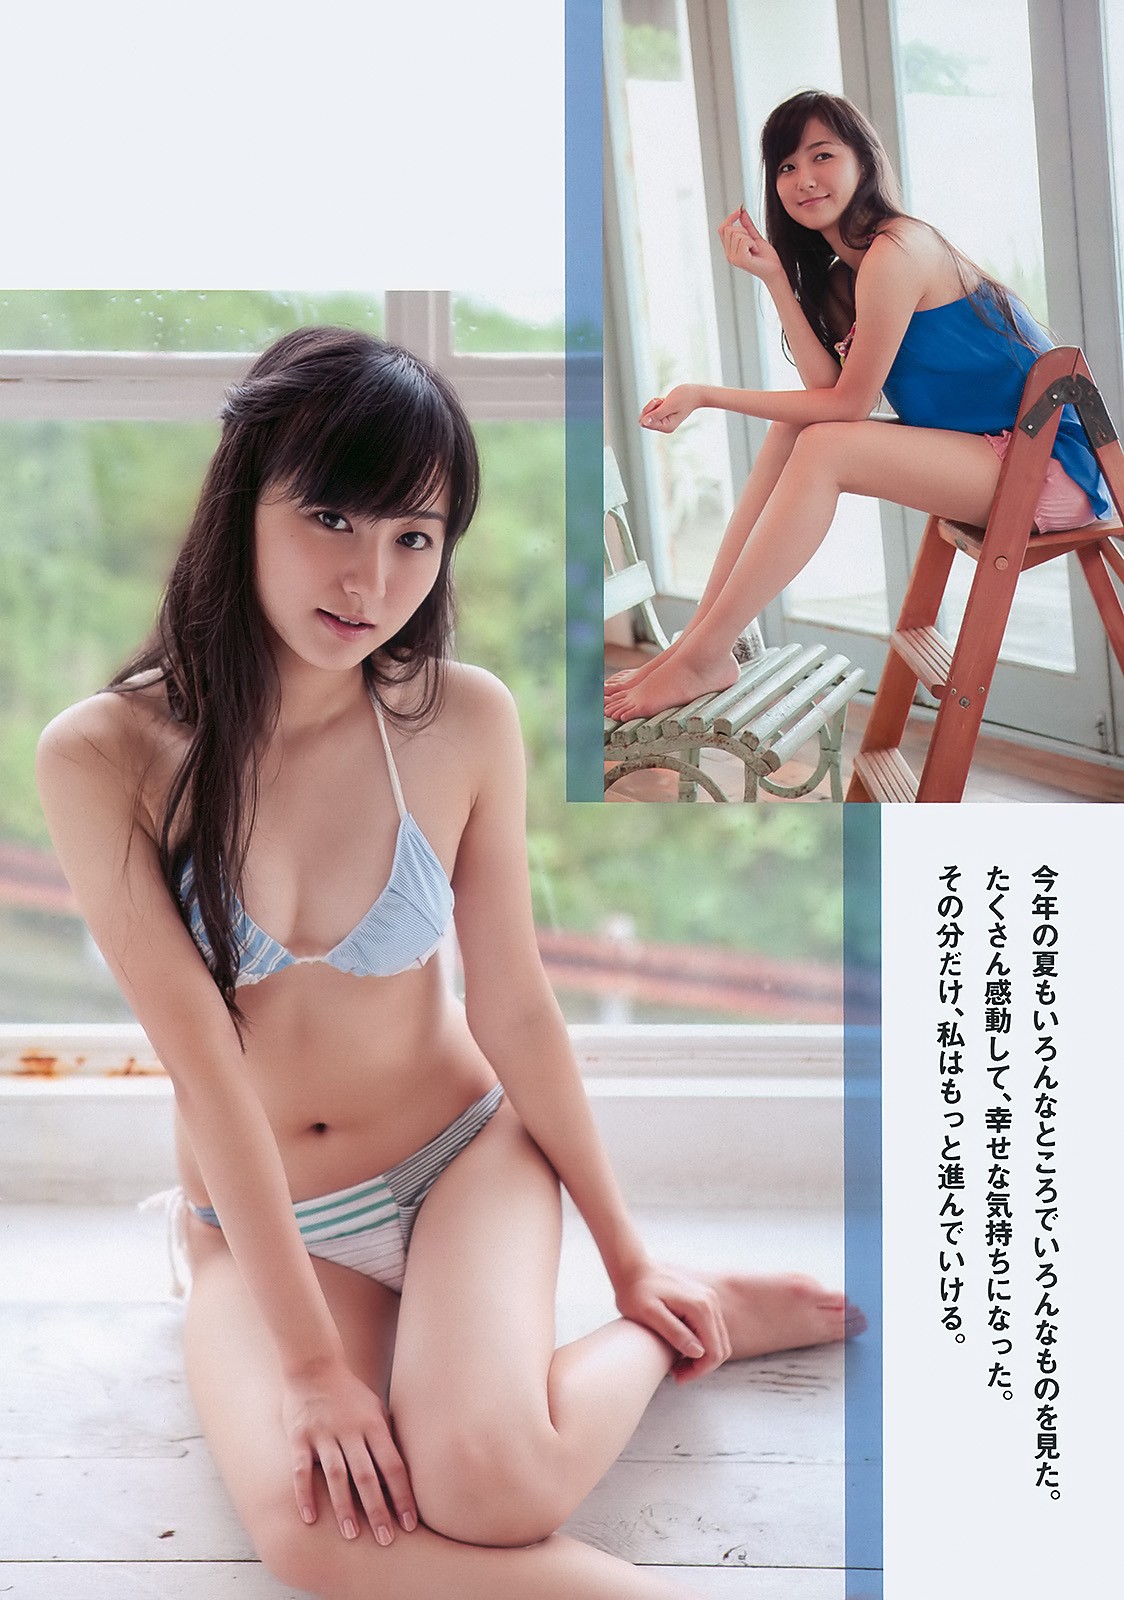 Eyval たかだ りほ 高田里穂 Riho Takada Weekly Playboy 10 09